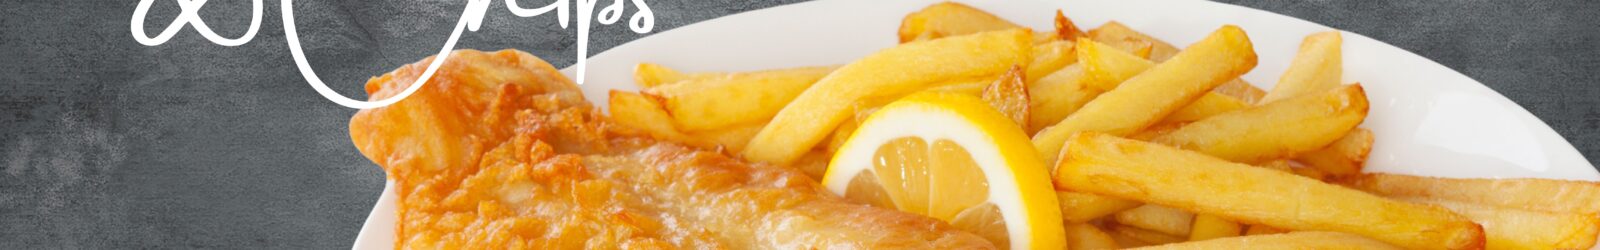 International Business Seminars - Recipe: How to Make Fish and Chips